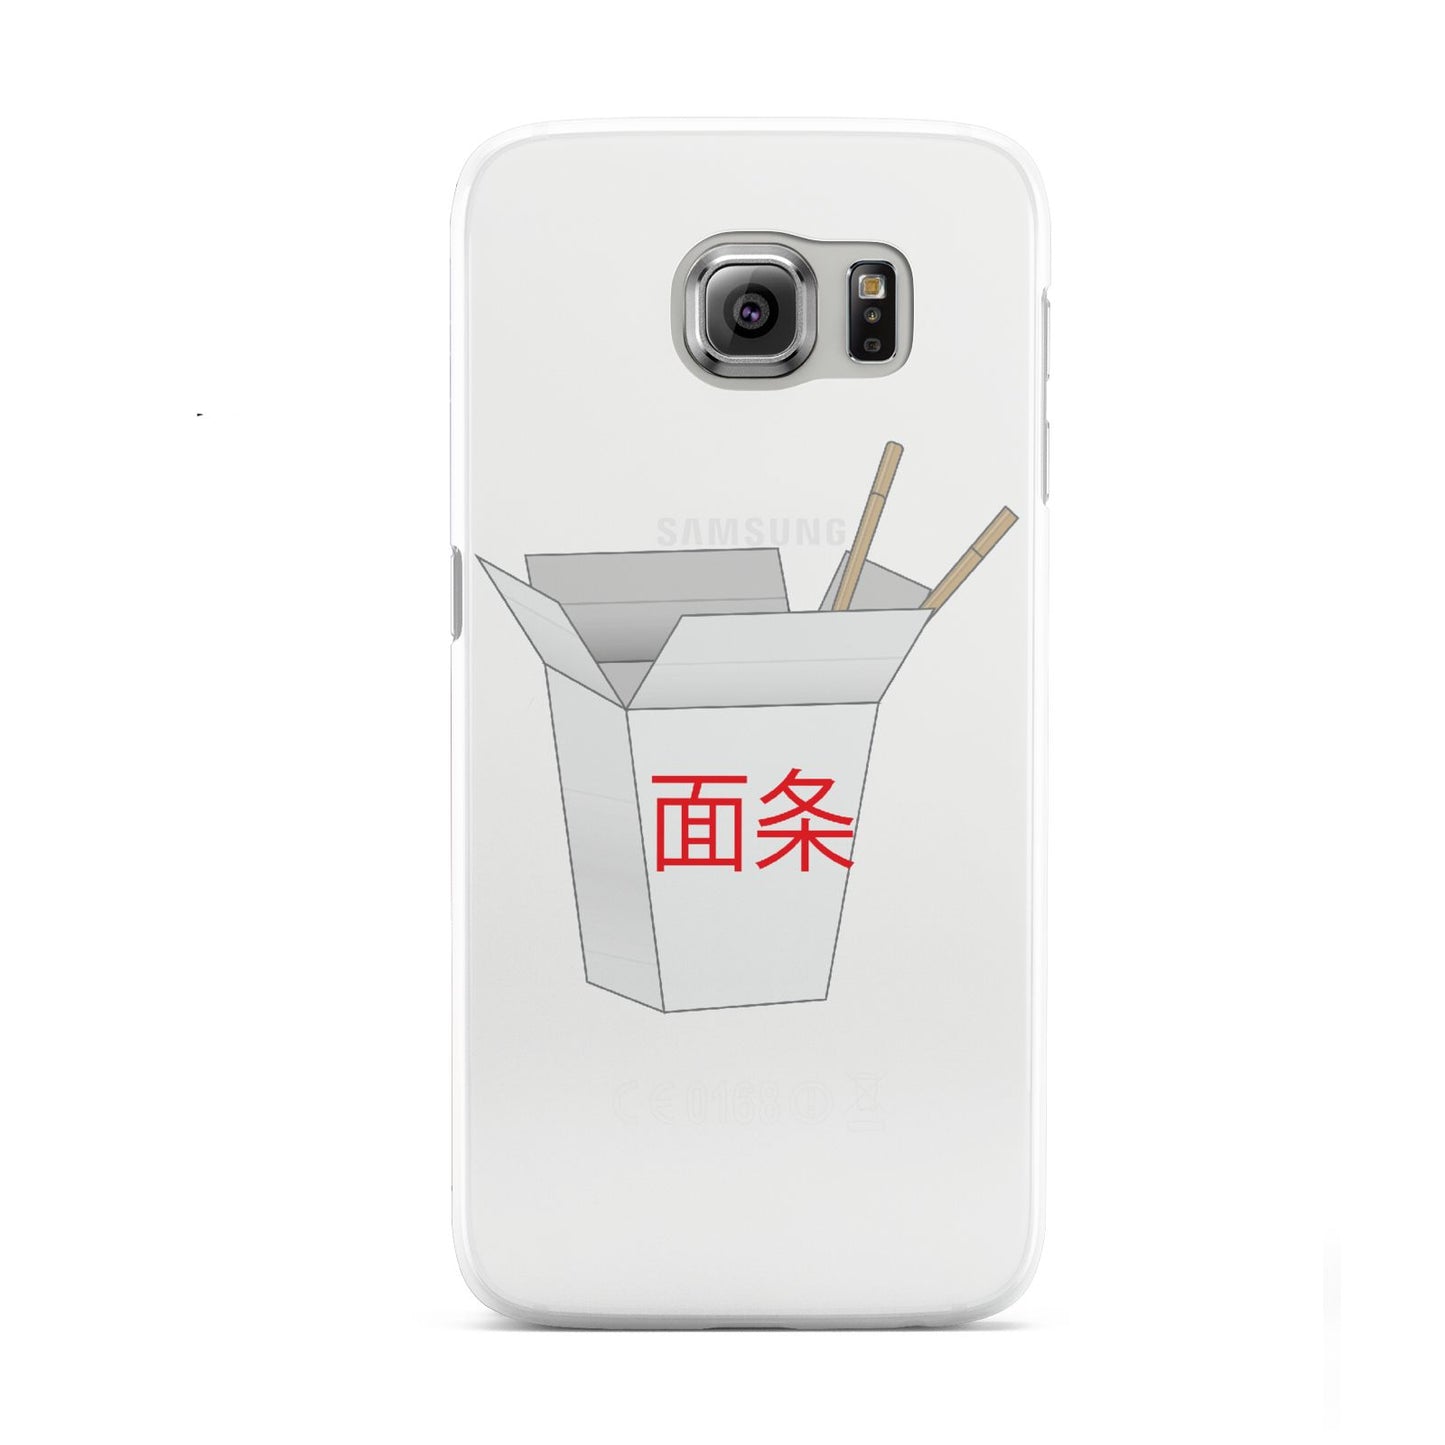 Chinese Takeaway Box Samsung Galaxy S6 Case